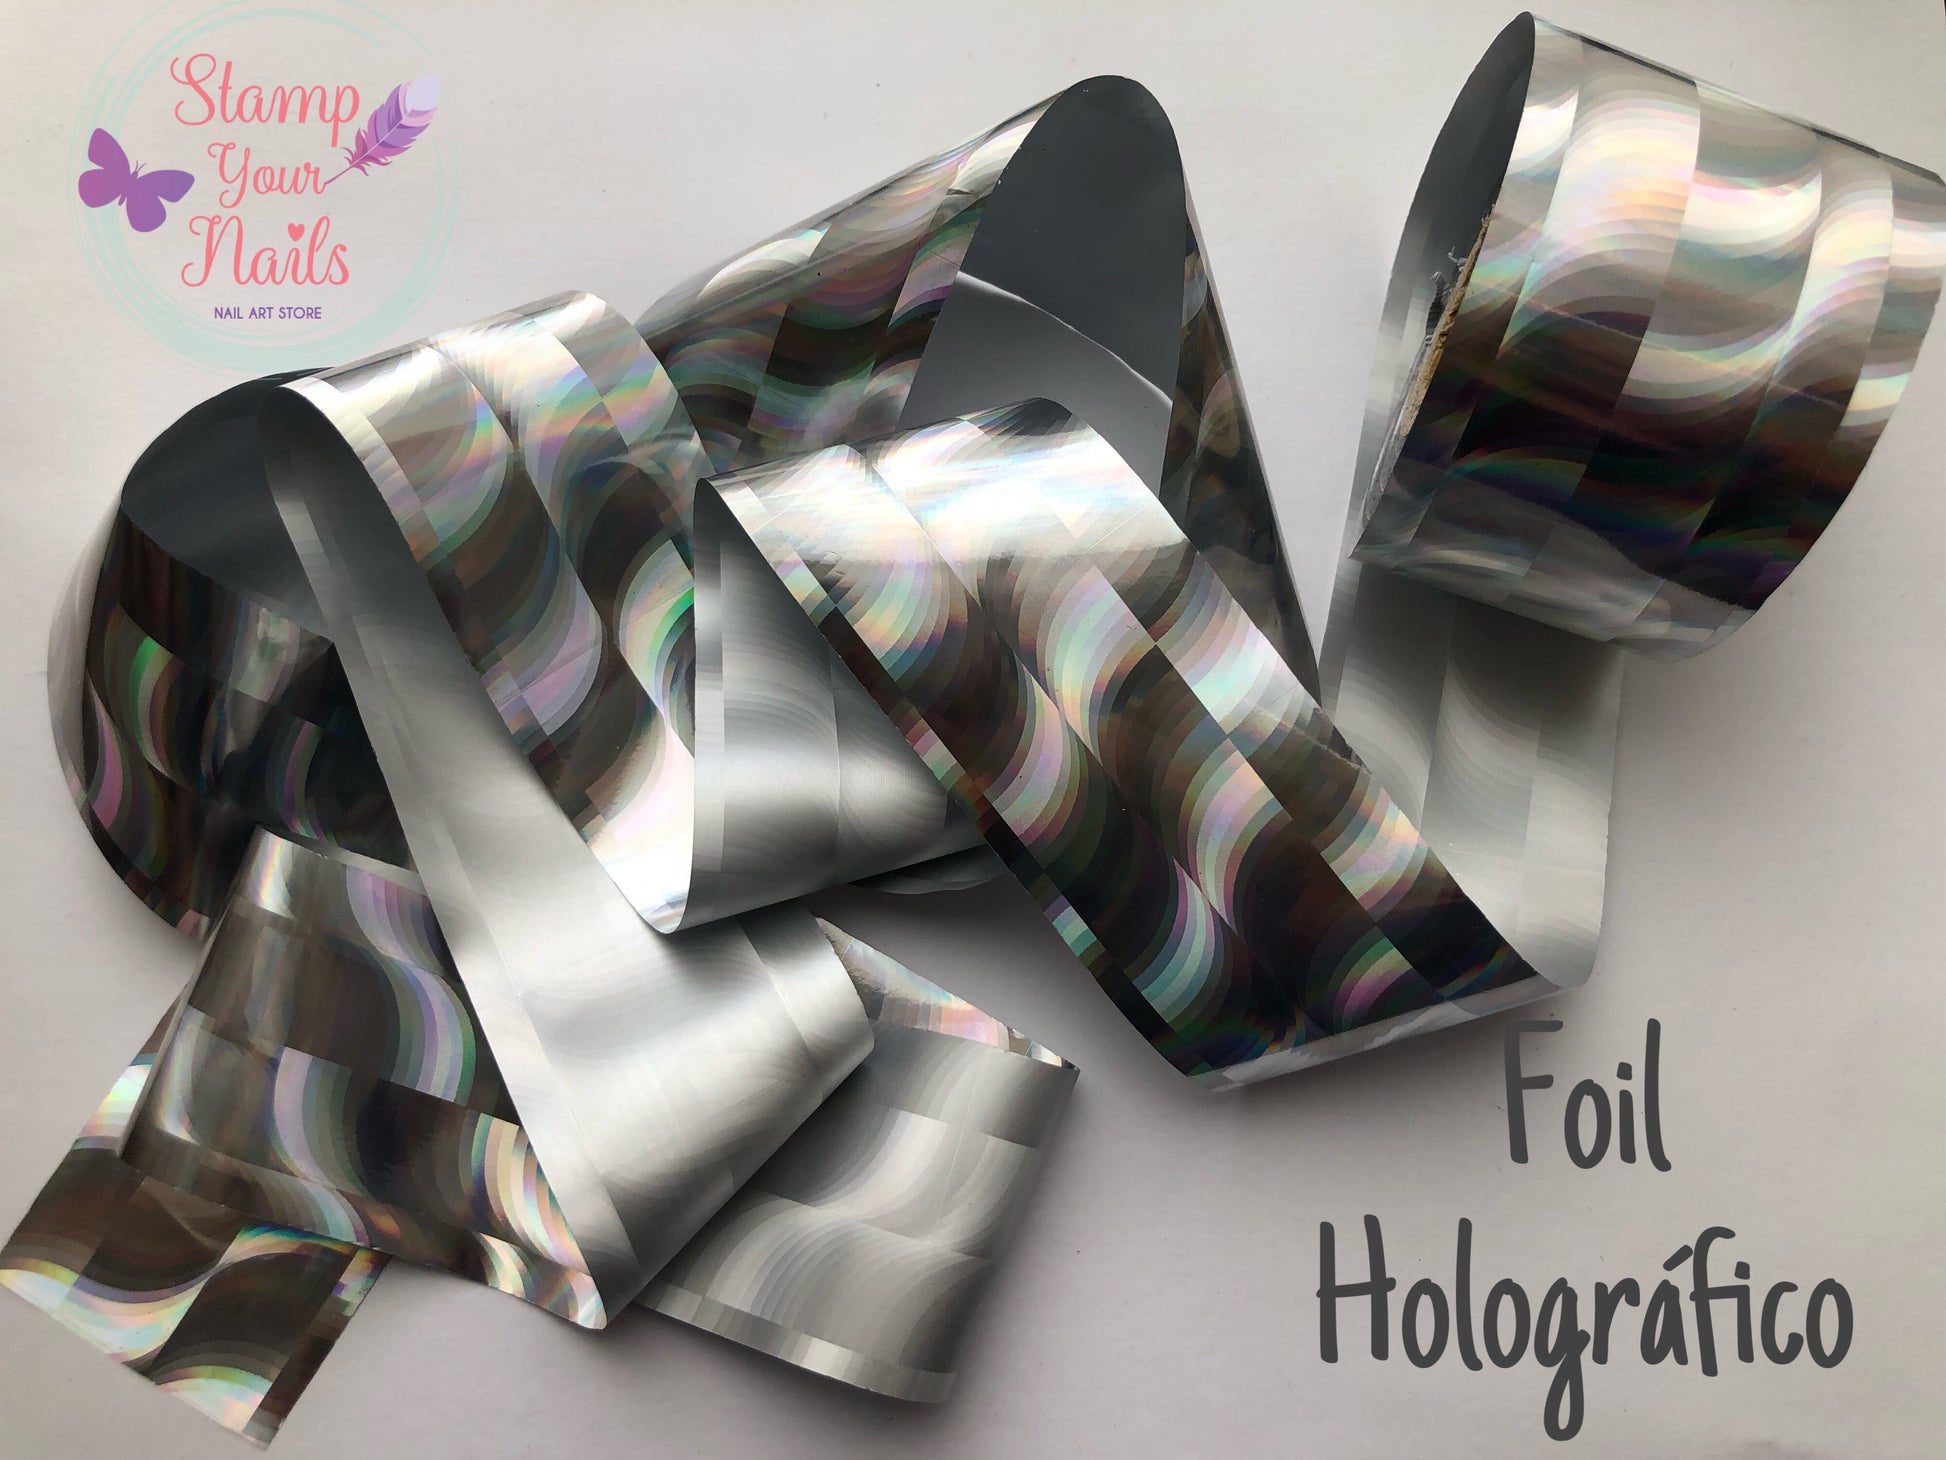 Foil holográfico - Stamp your nails